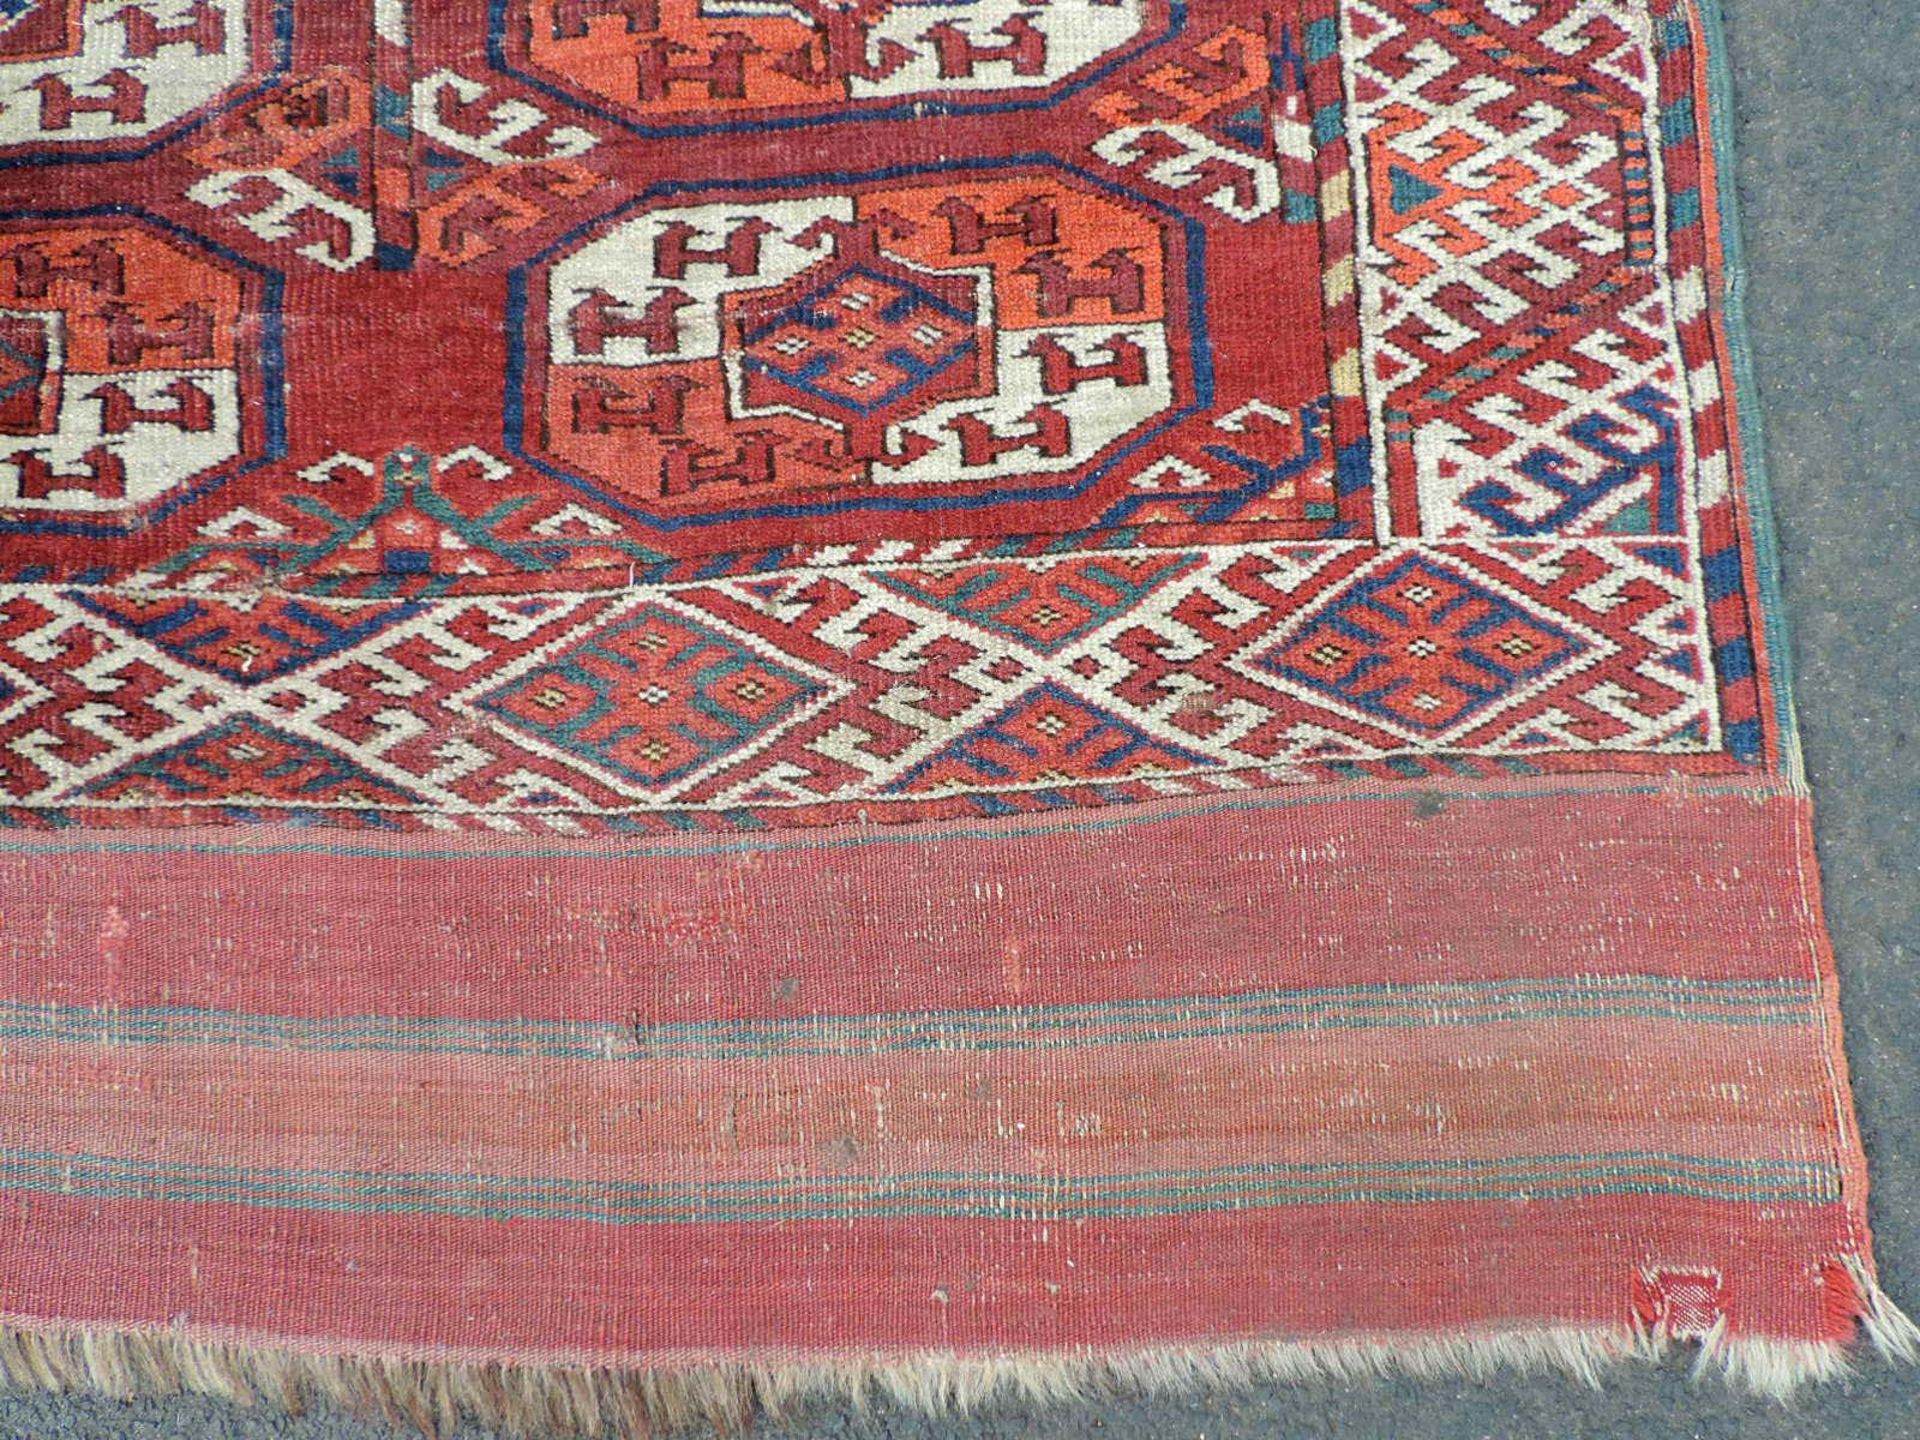 Kizil Ayak Hauptteppich. Turkmenistan, antik, um 1850.427 cm x 200 cm insgesamt. Handgeknüpft, Wolle - Image 2 of 14